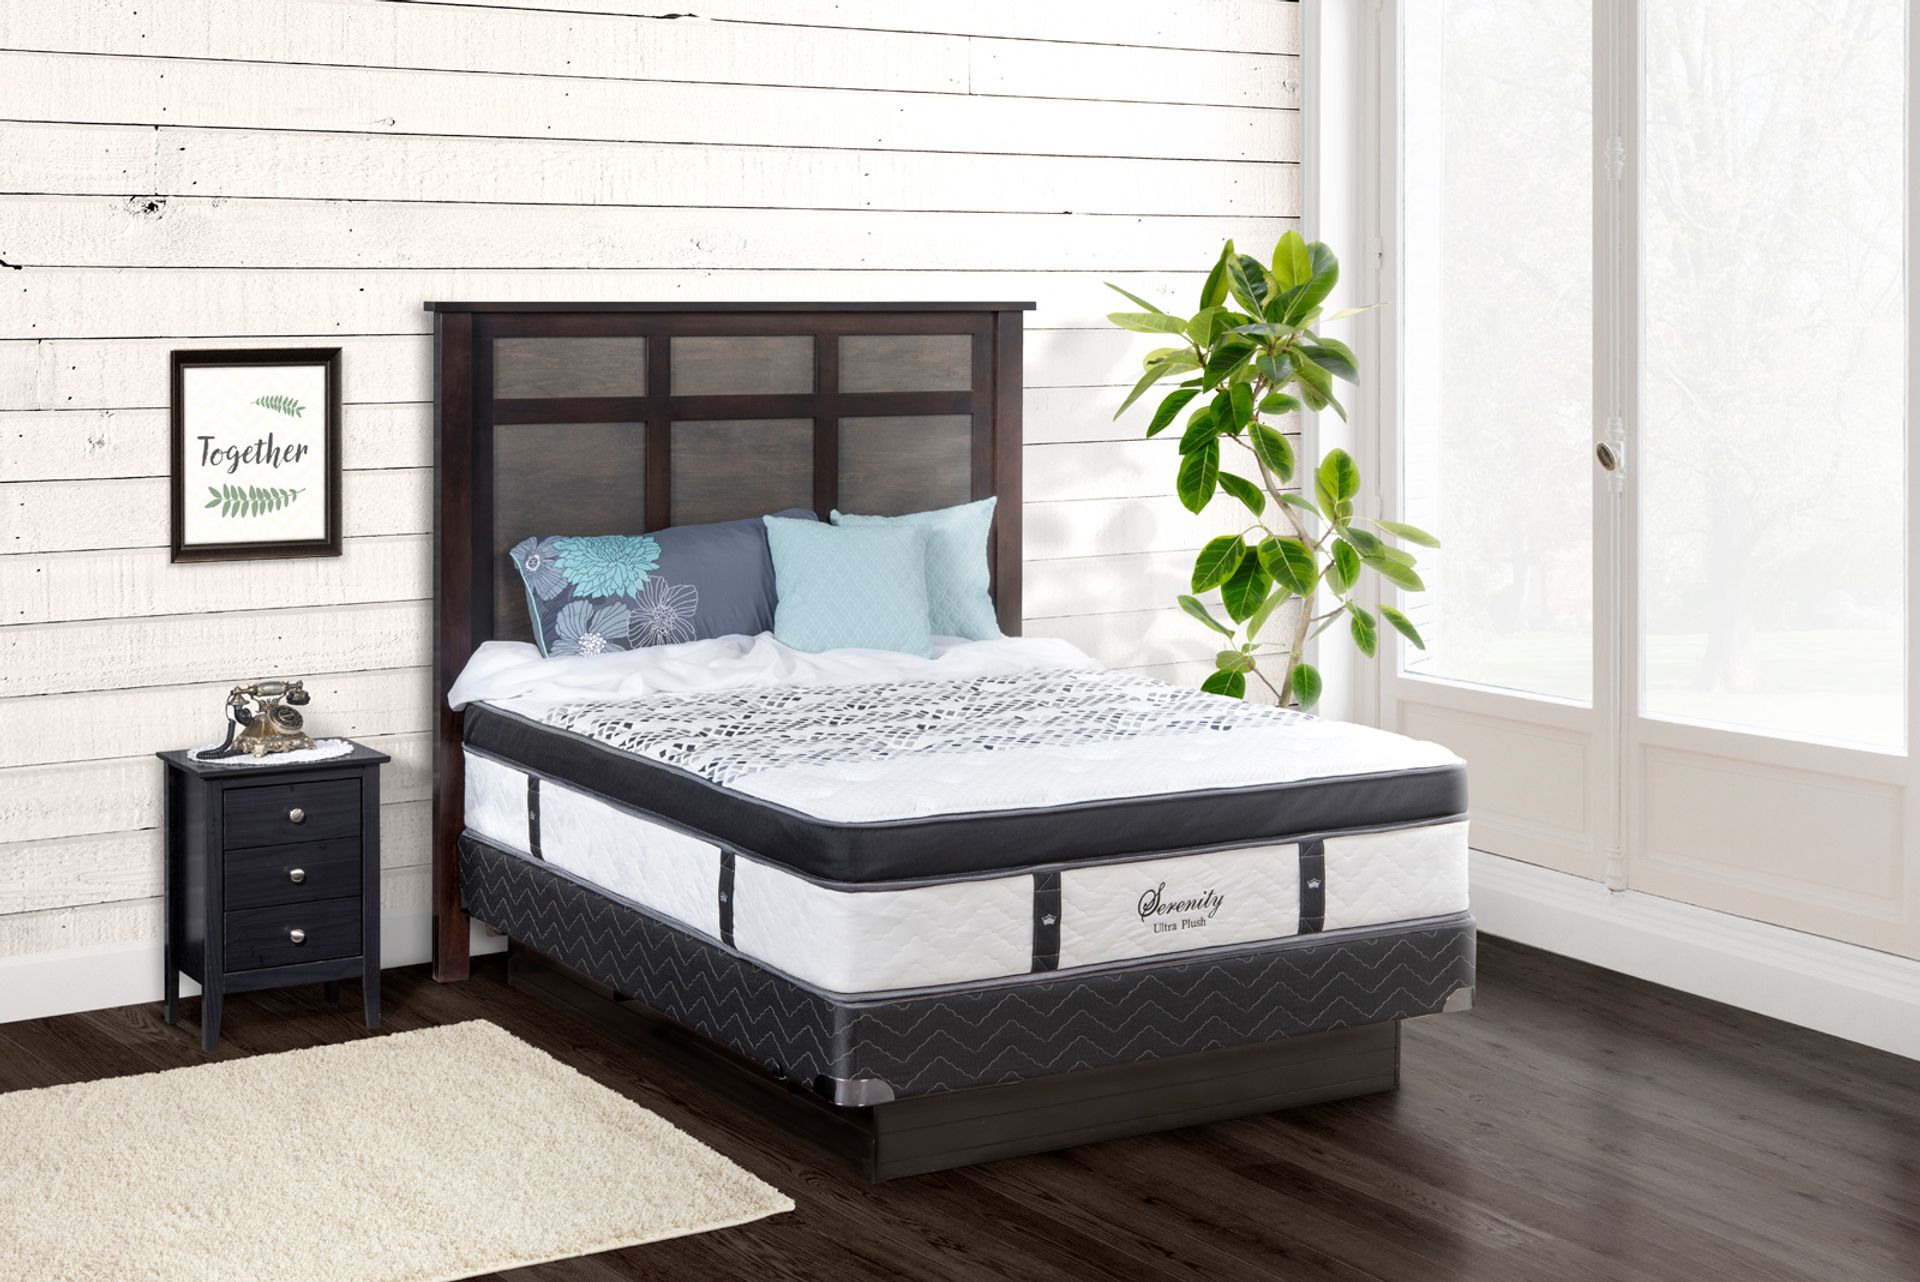 mattress for less bedroom furniture